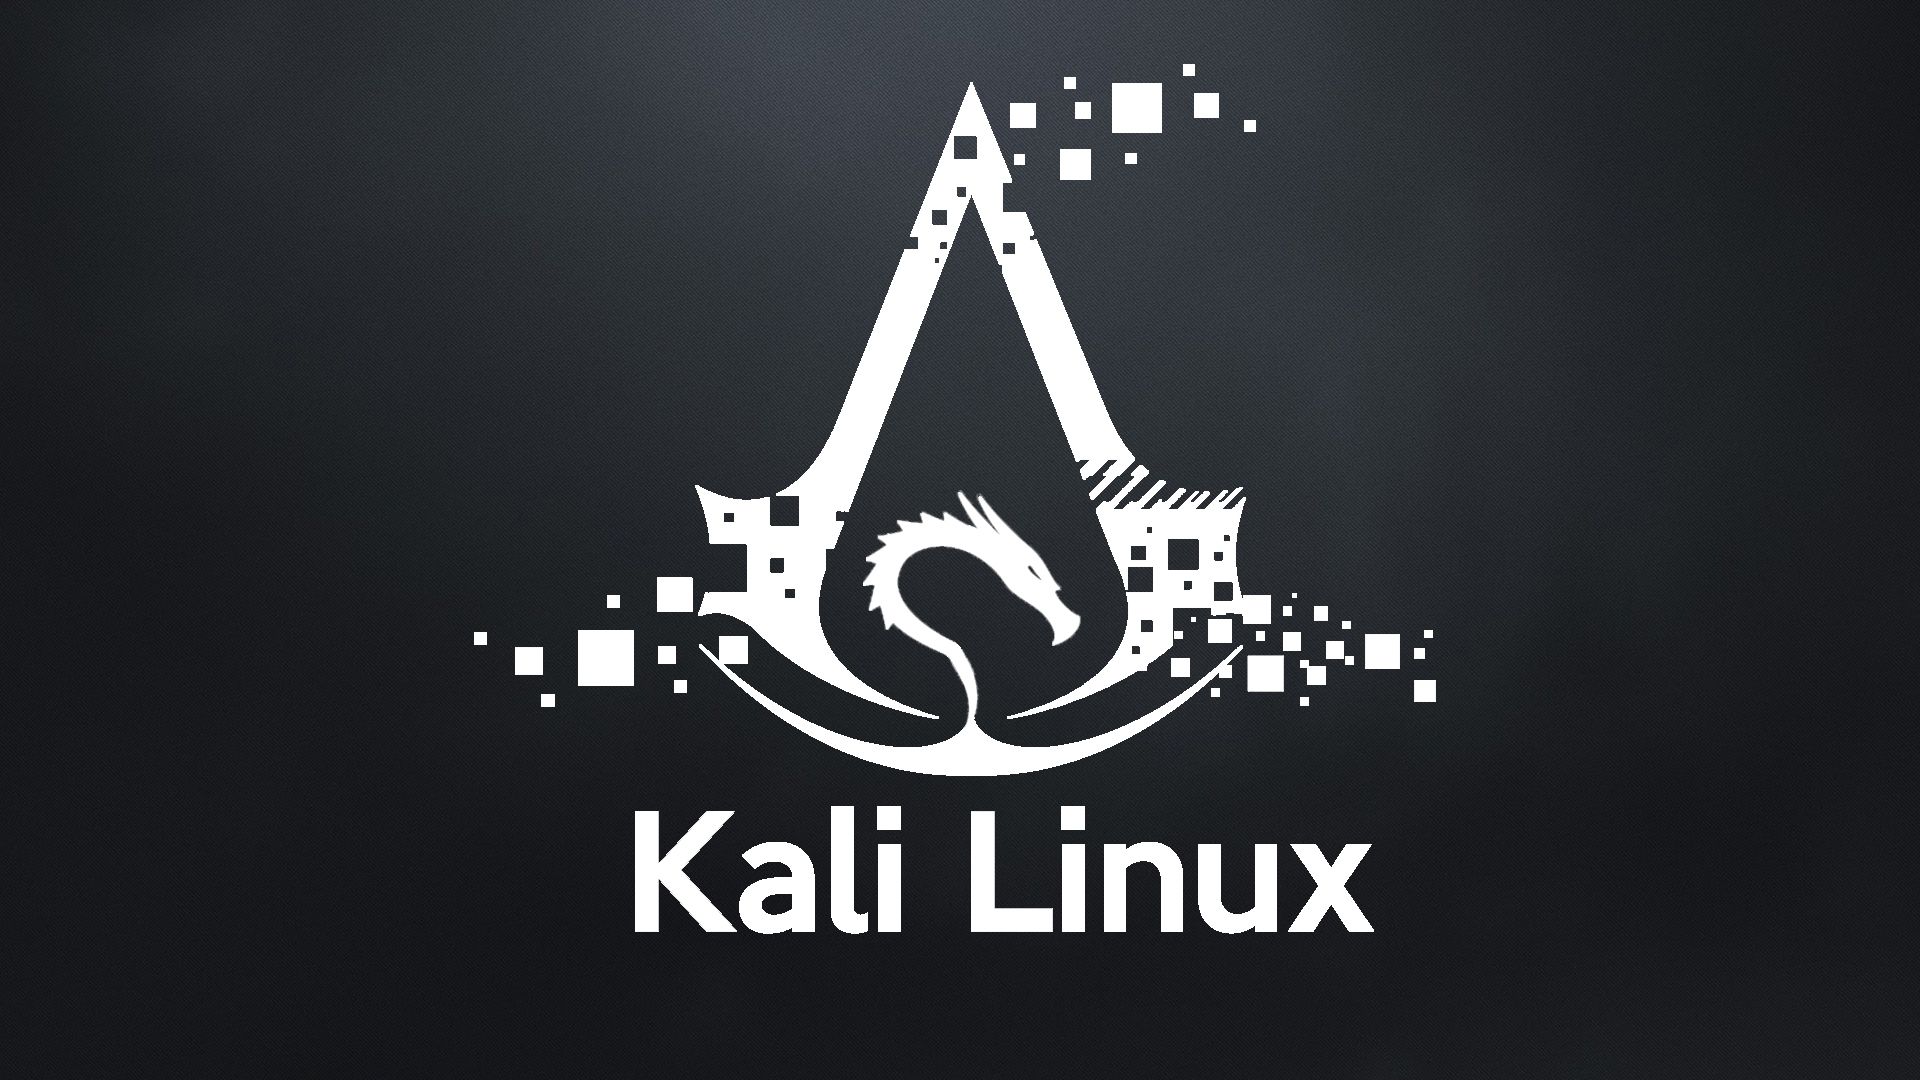 Download Kali Linux Blue Flames Wallpaper | Wallpapers.com